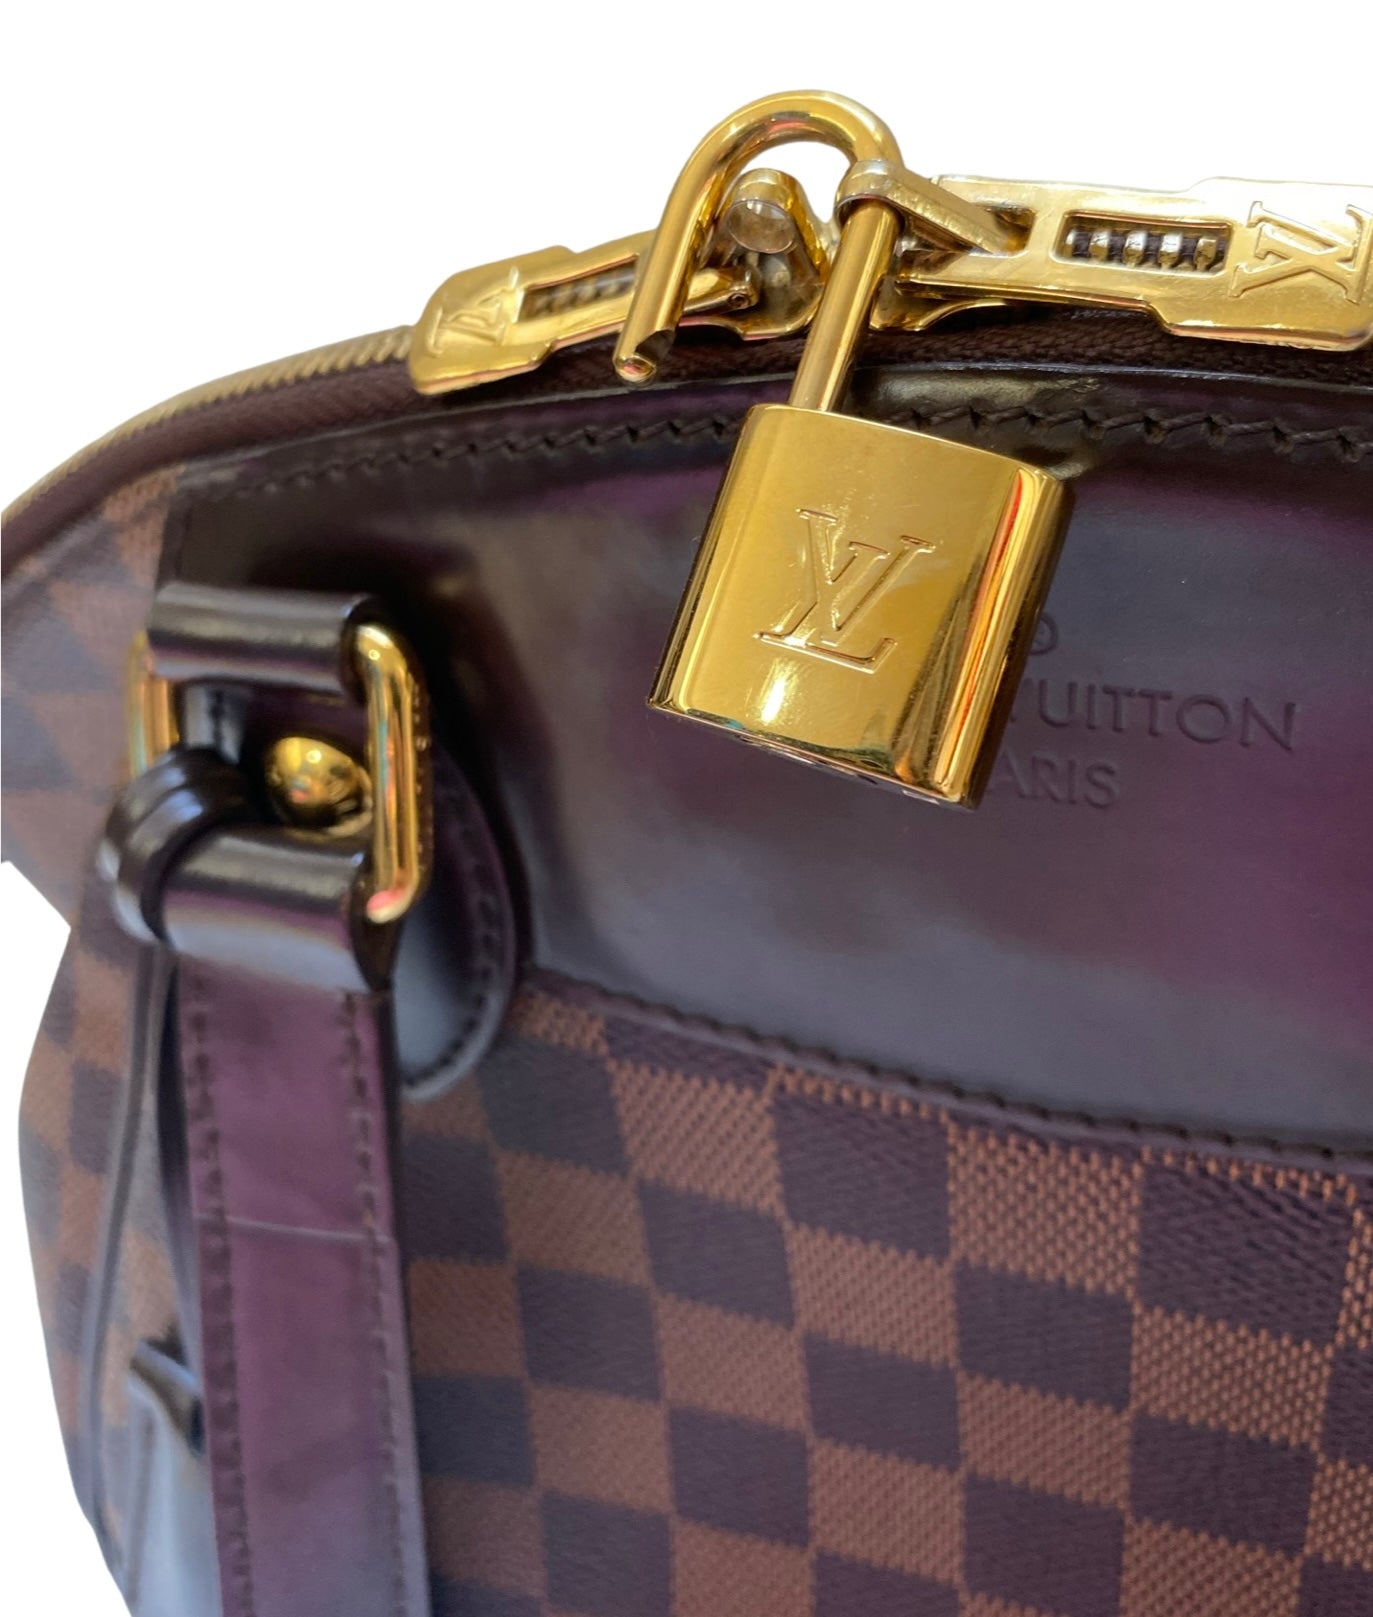 Louis Vuitton Verona PM Damier Ebene Satchel Handbag